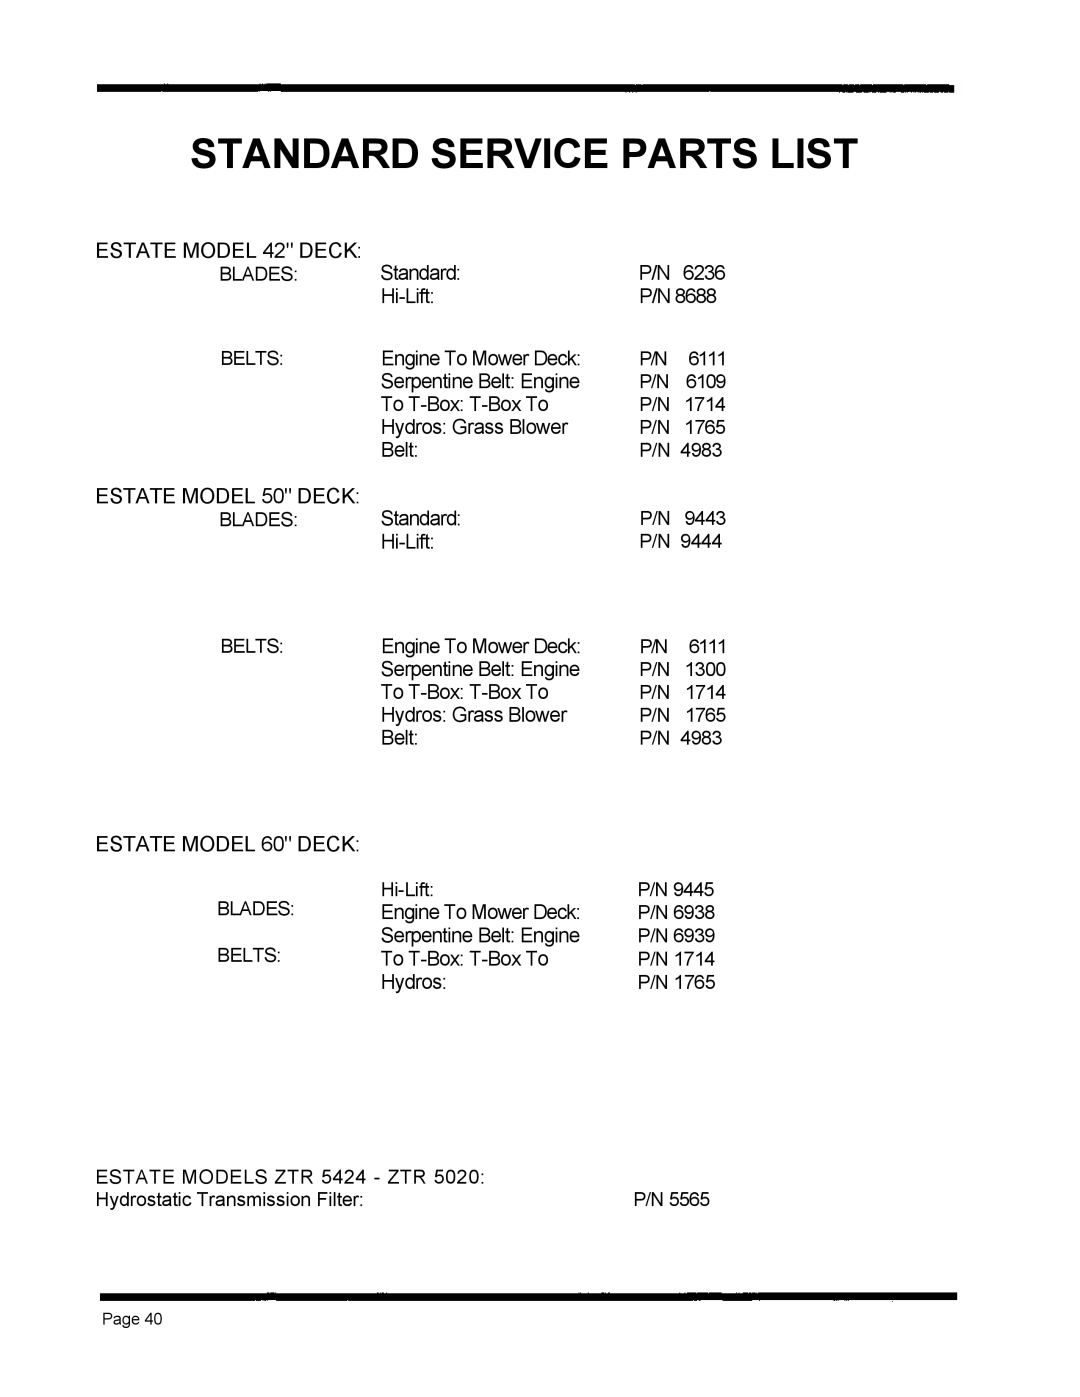 Dixon ZTR 5020, ZTR 5424 Standard Service Parts List, ESTATE MODEL 42 DECK, ESTATE MODEL 50 DECK, ESTATE MODEL 60 DECK 